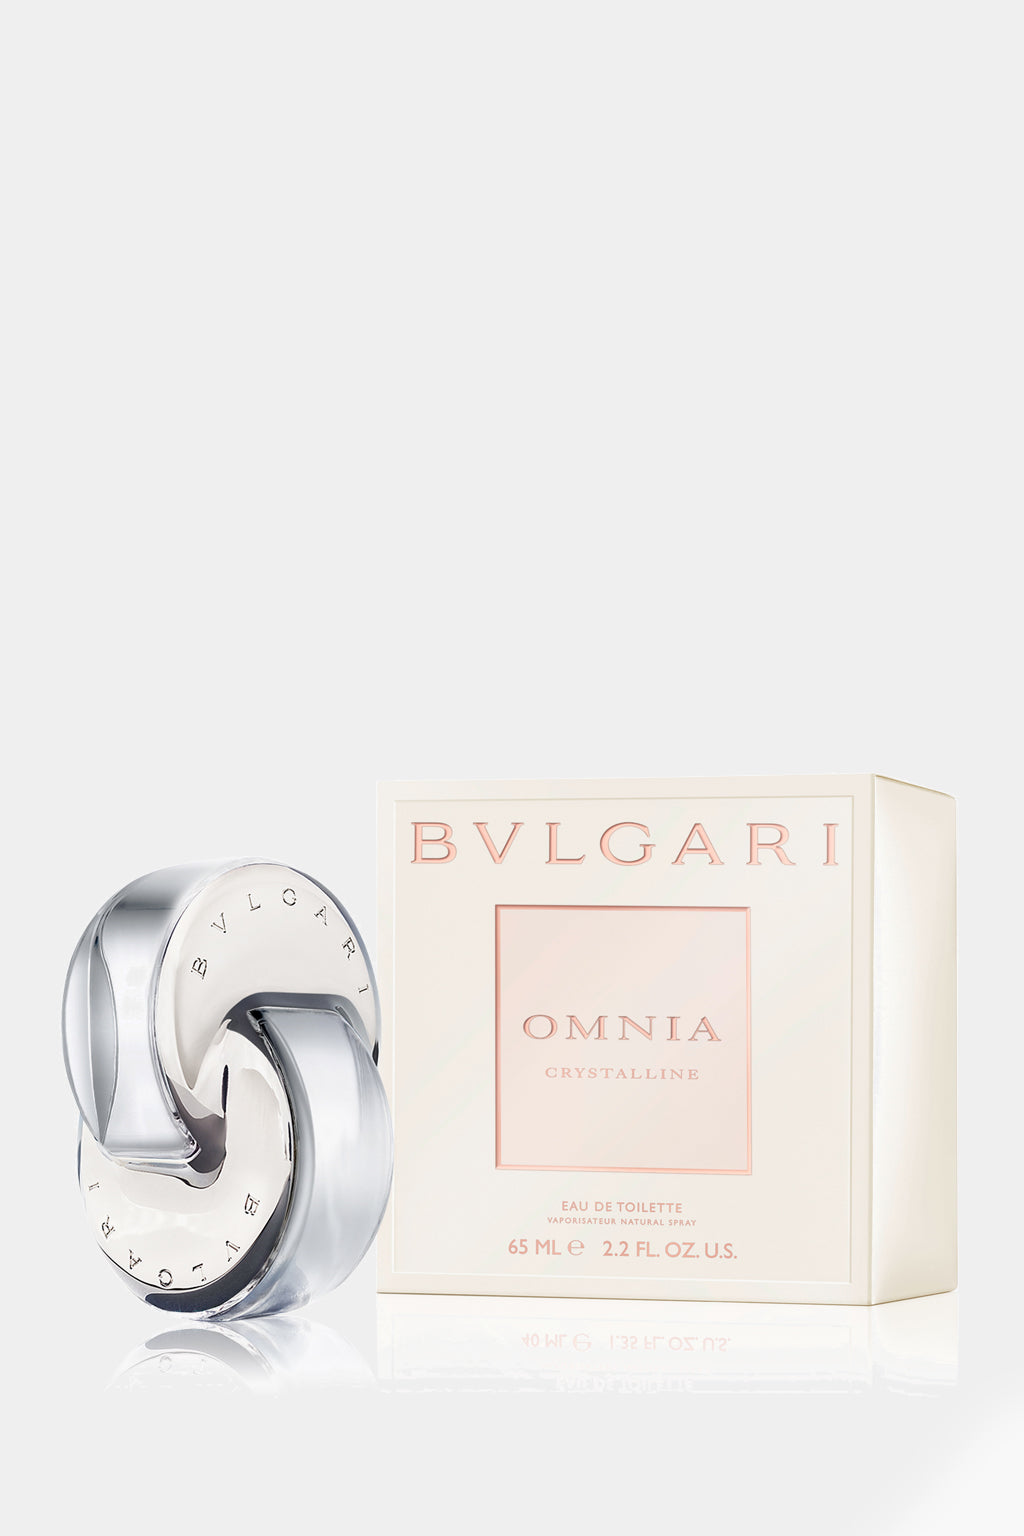 Bvlgari - Omnia Crystalline Eau de Toilette